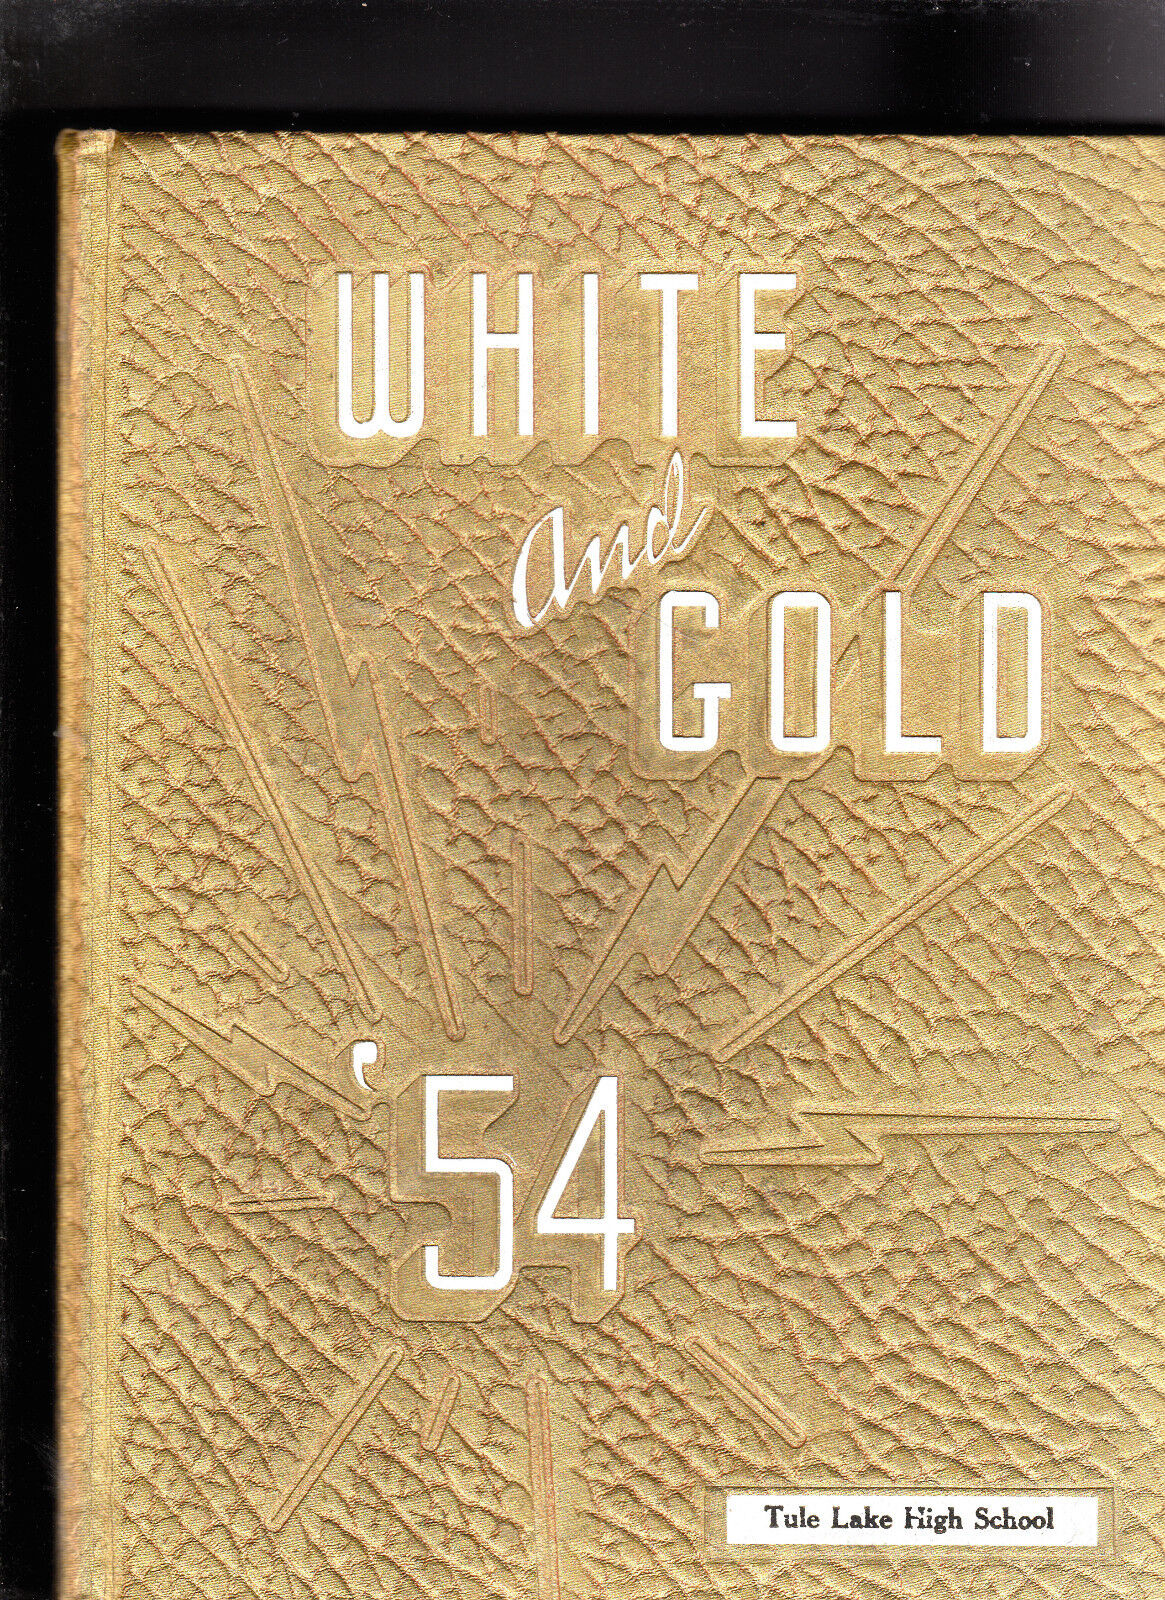 1954 Tule Lake High School Year Book White and Gold Siskiyou County, California